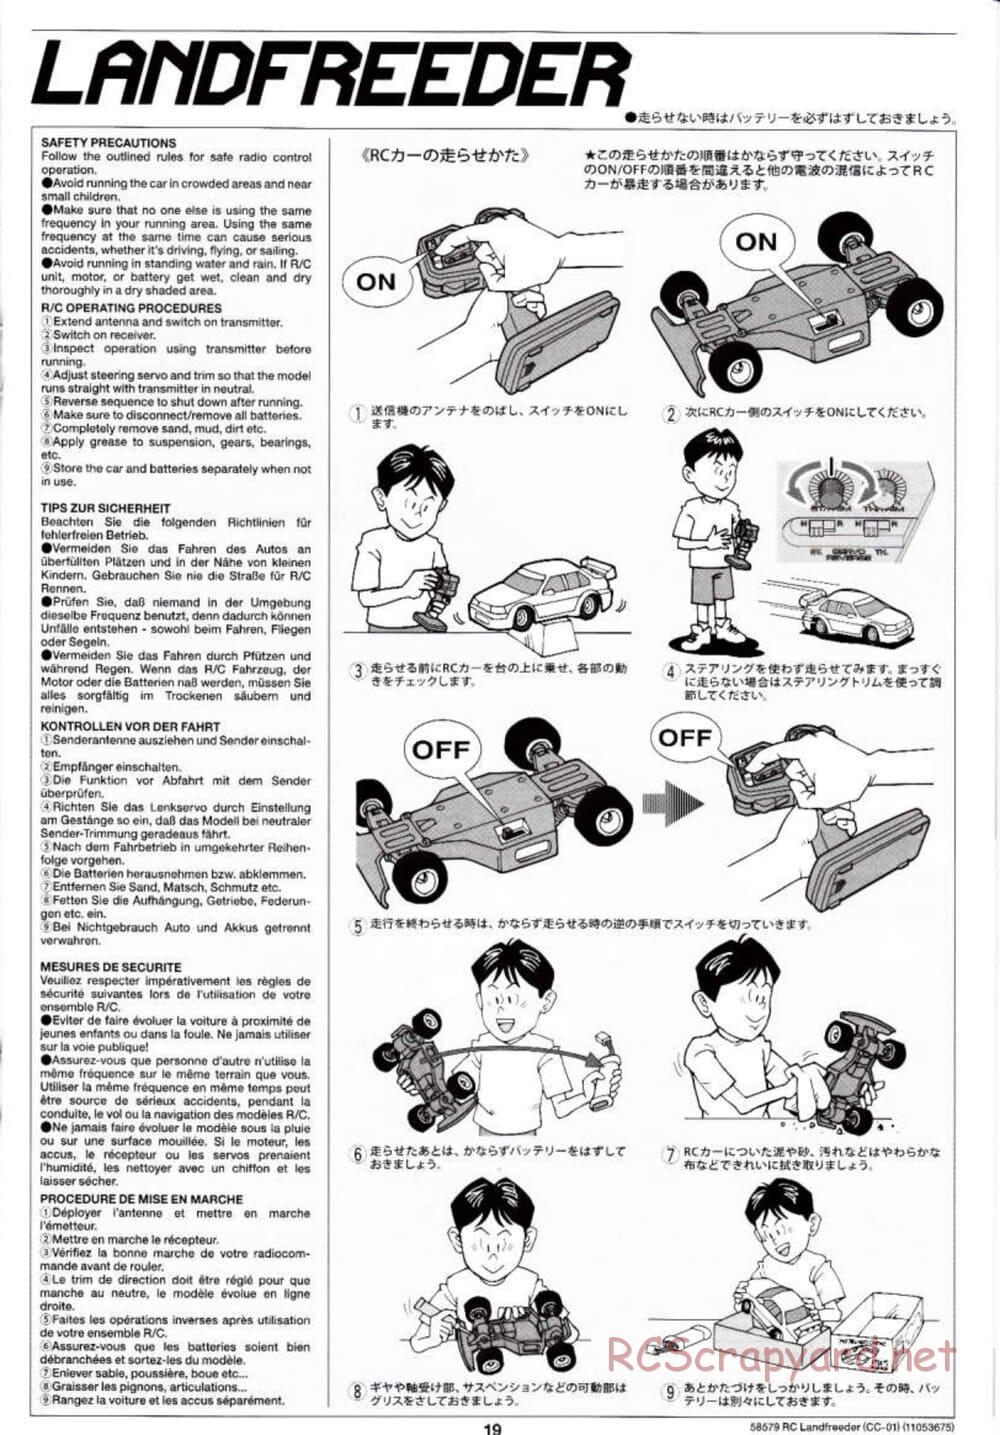 Tamiya - LandFreeder - CC-01 Chassis - Manual - Page 19